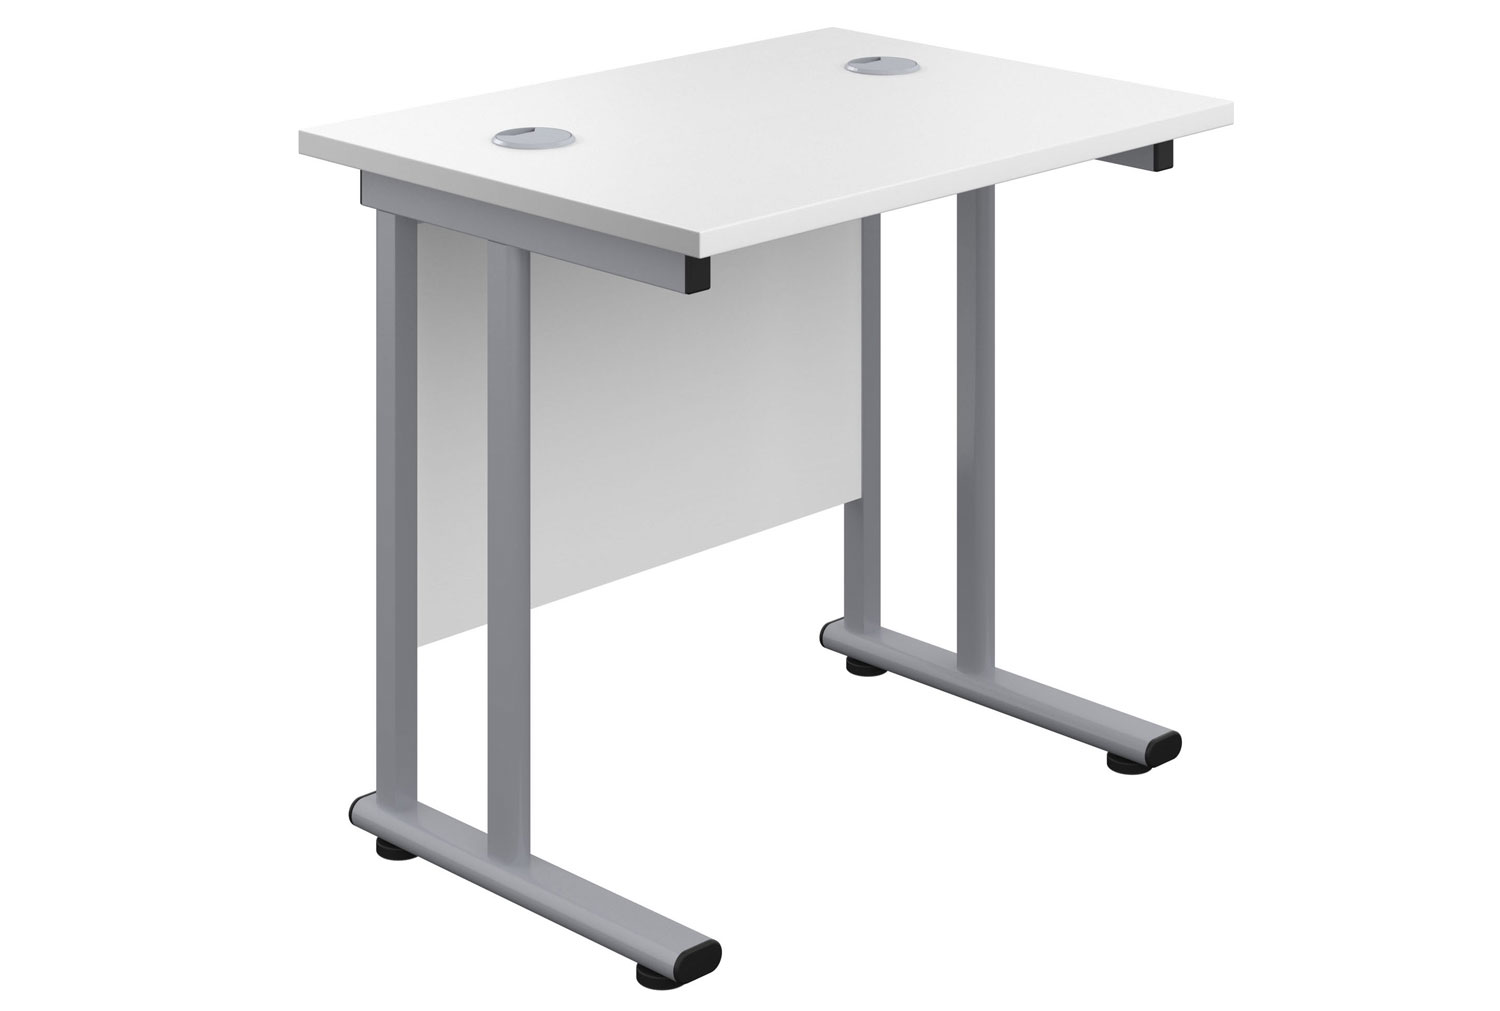 Progress II Narrow Rectangular Office Desk, 80wx60dx73h (cm), Silver Frame, White, Express Delivery